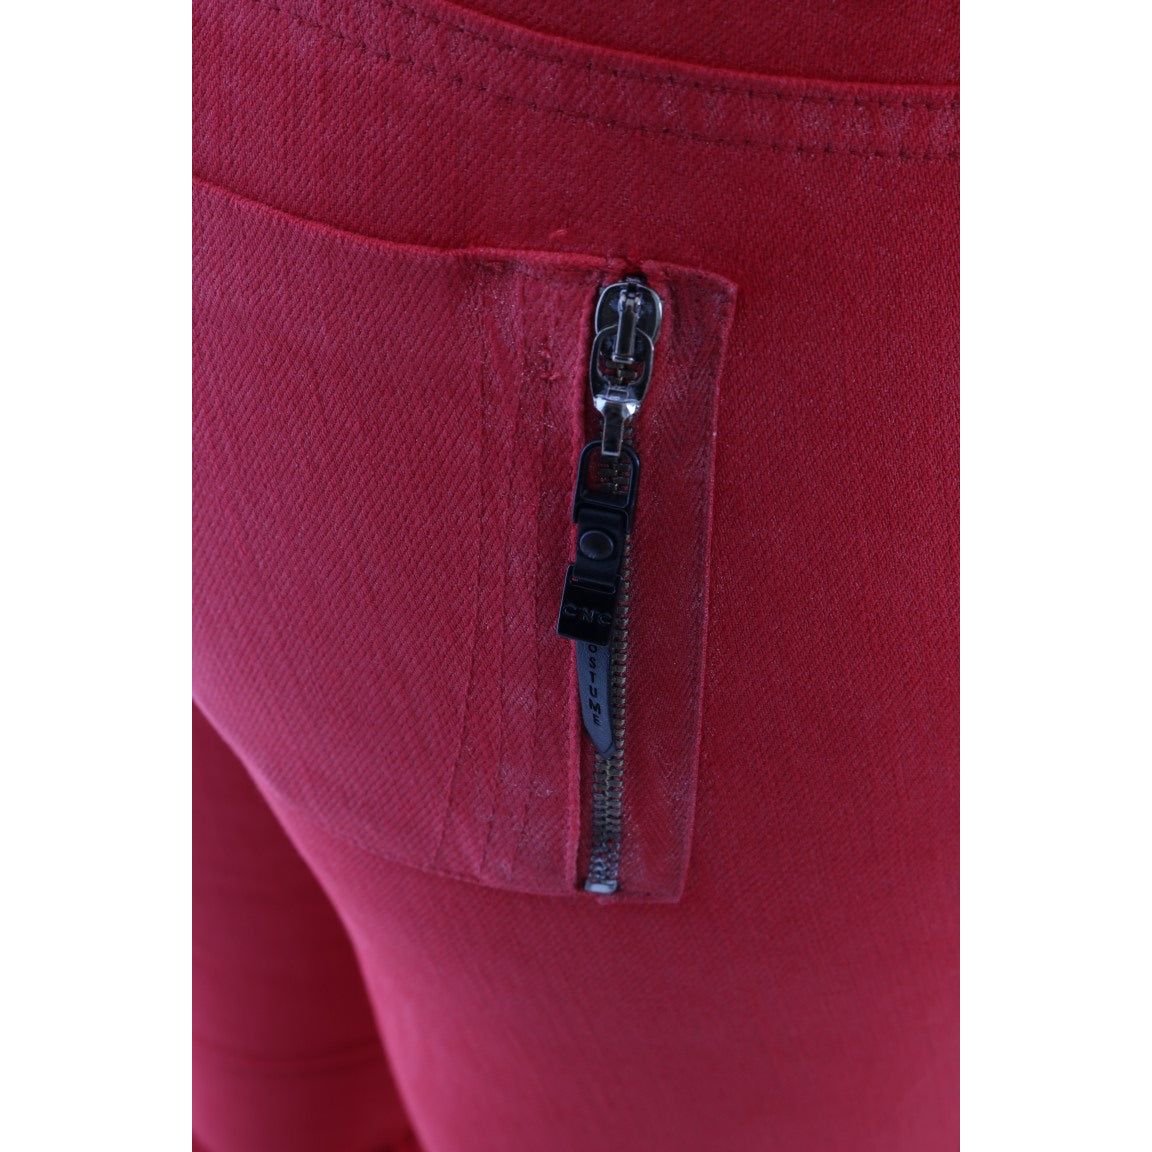 Costume National Radiant Red Super Slim Designer Jeans red-cotton-stretch-slim-jeans